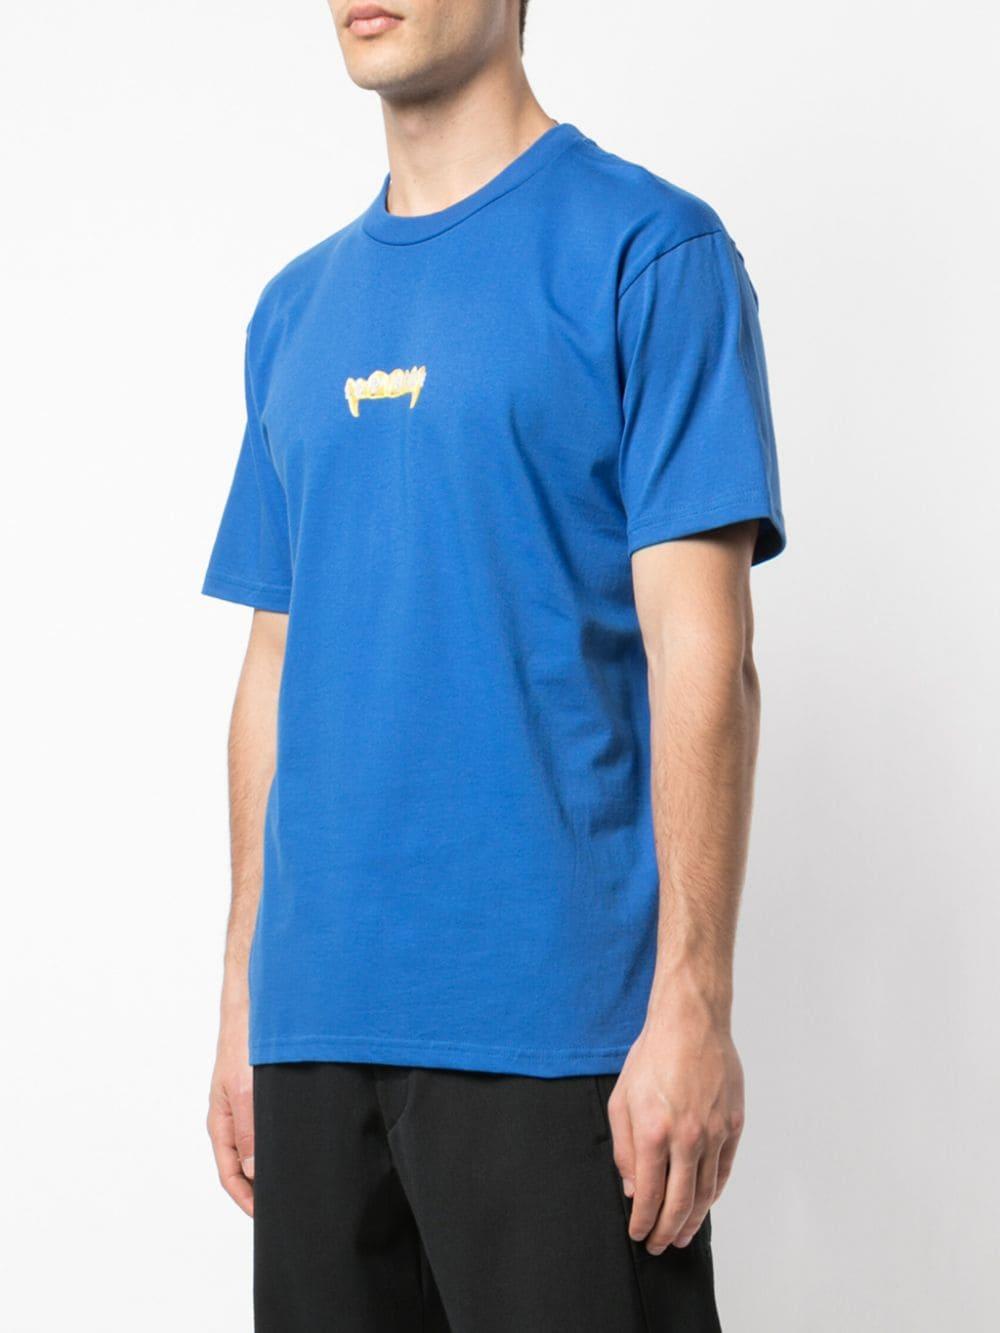 Supreme Cotton Logo Print T-shirt in Blue for Men - Lyst